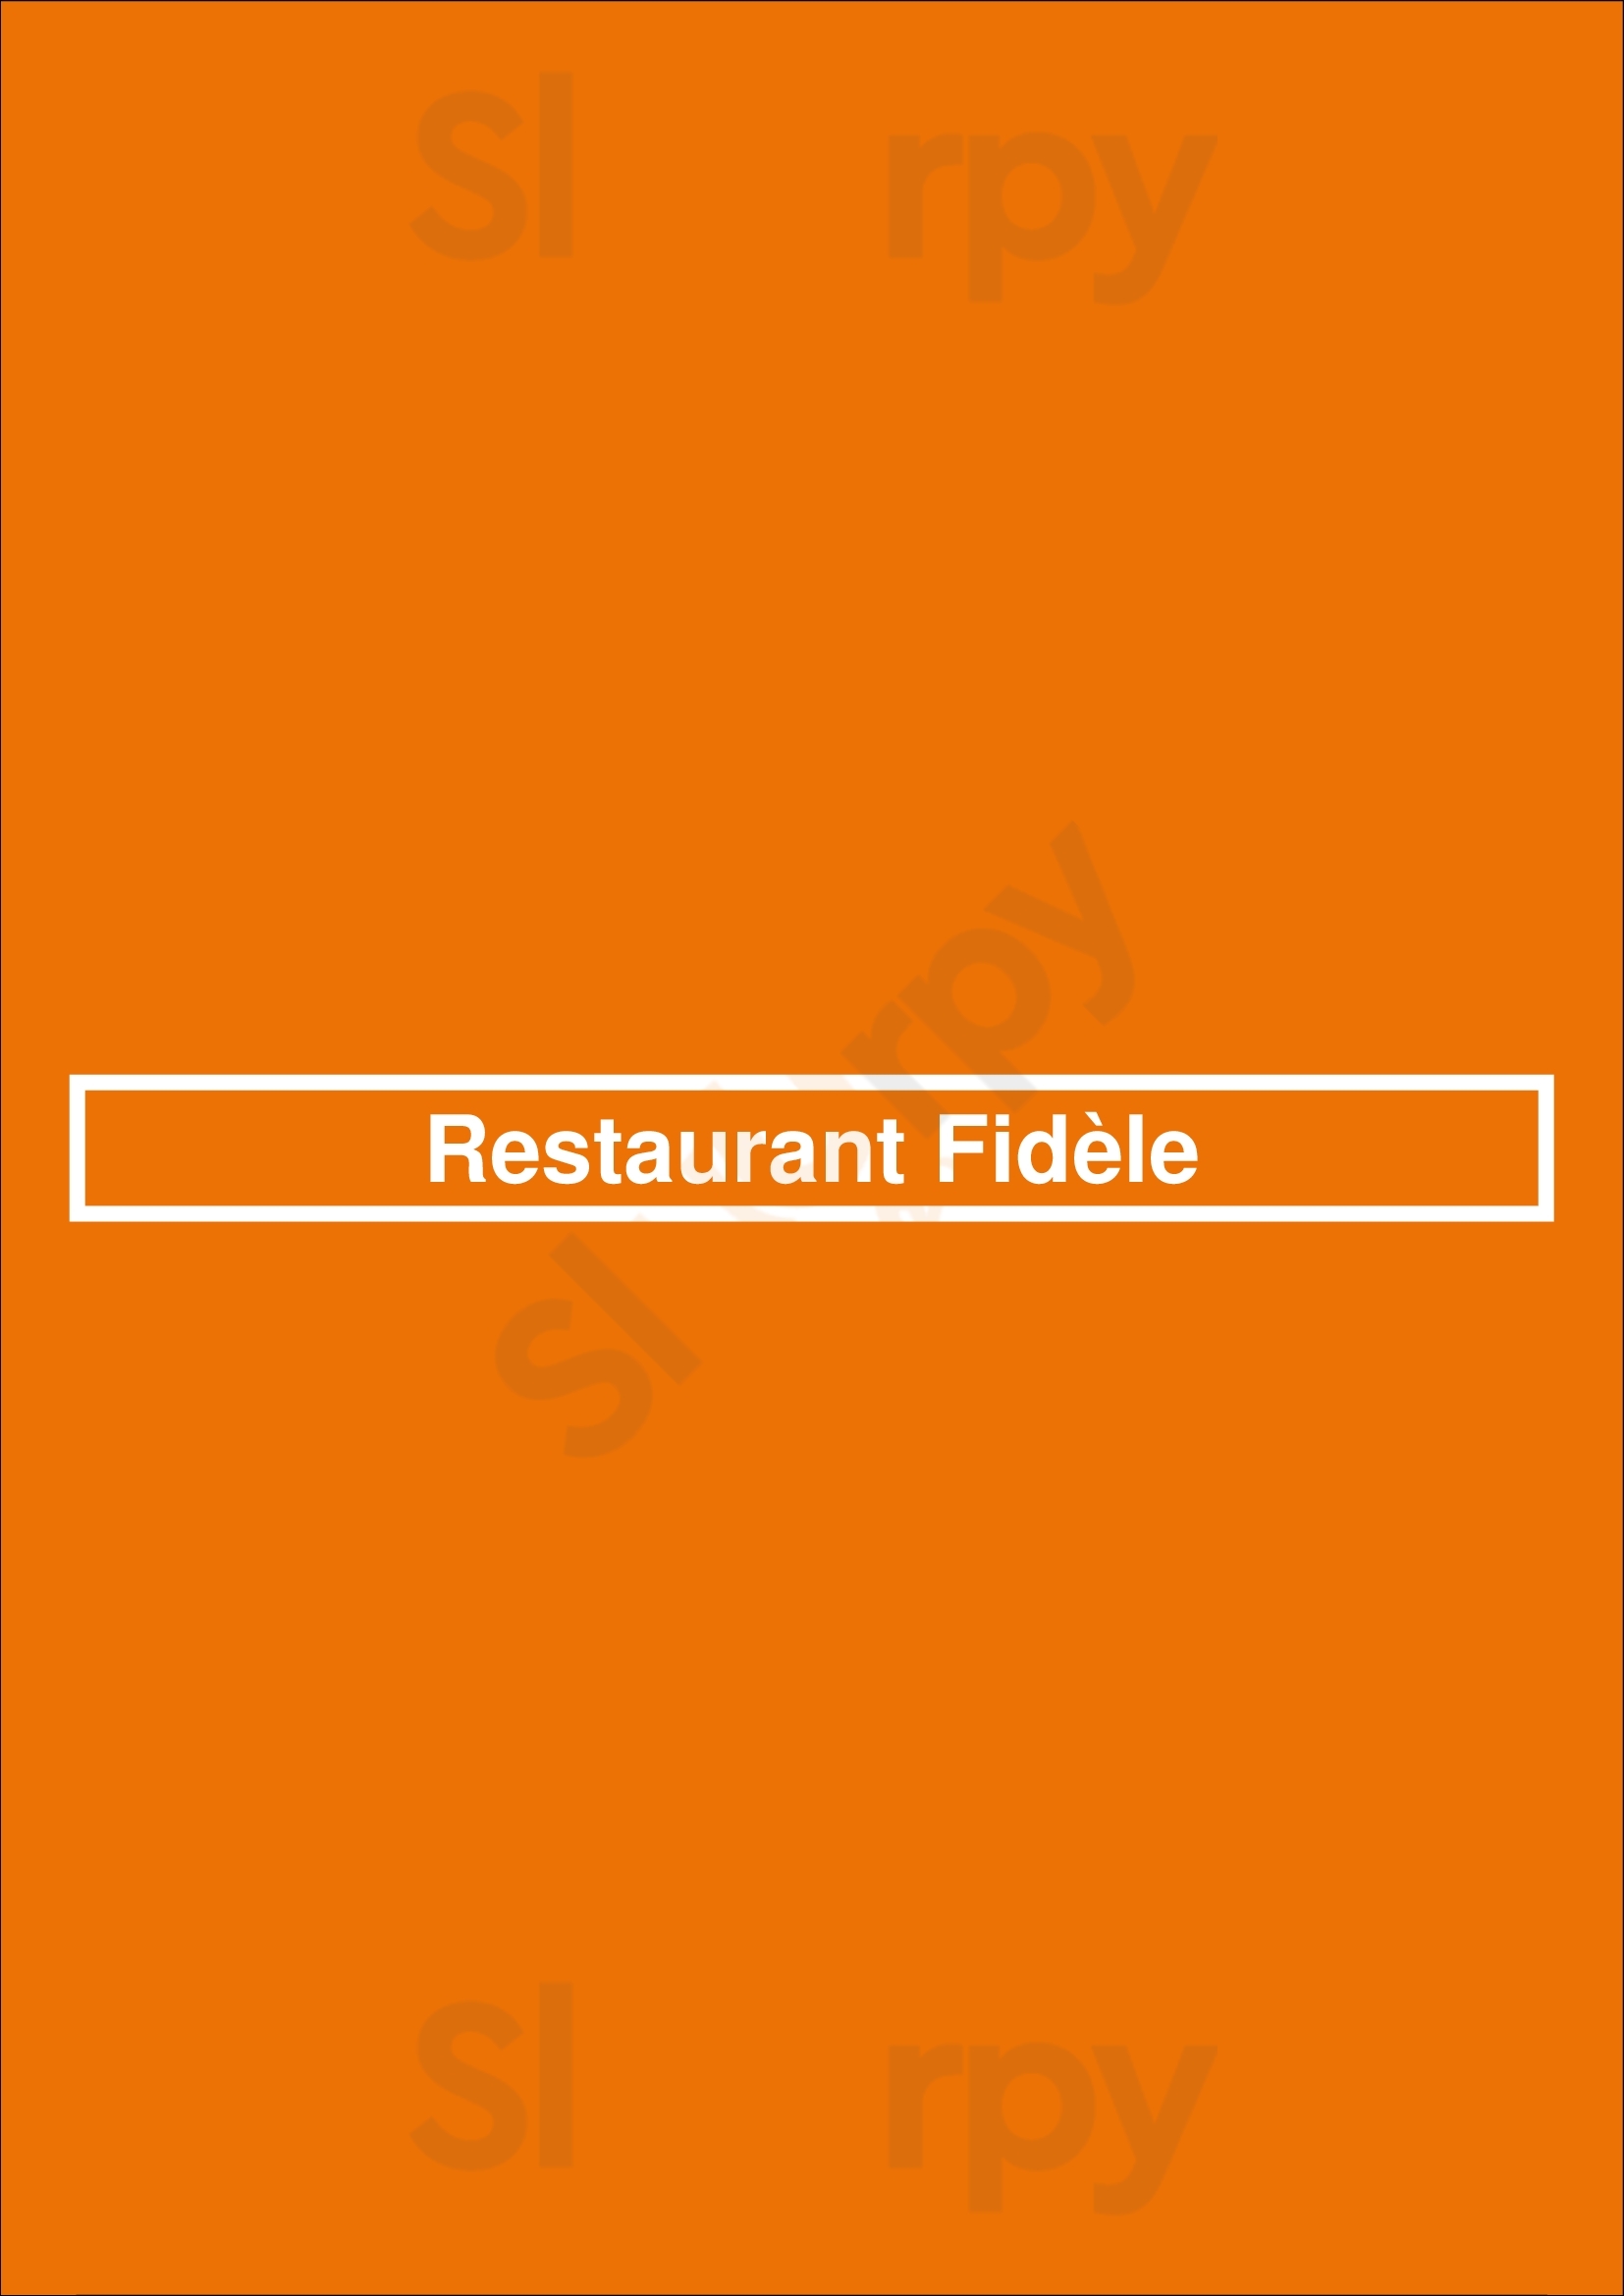 Restaurant Fidèle Drachten Menu - 1